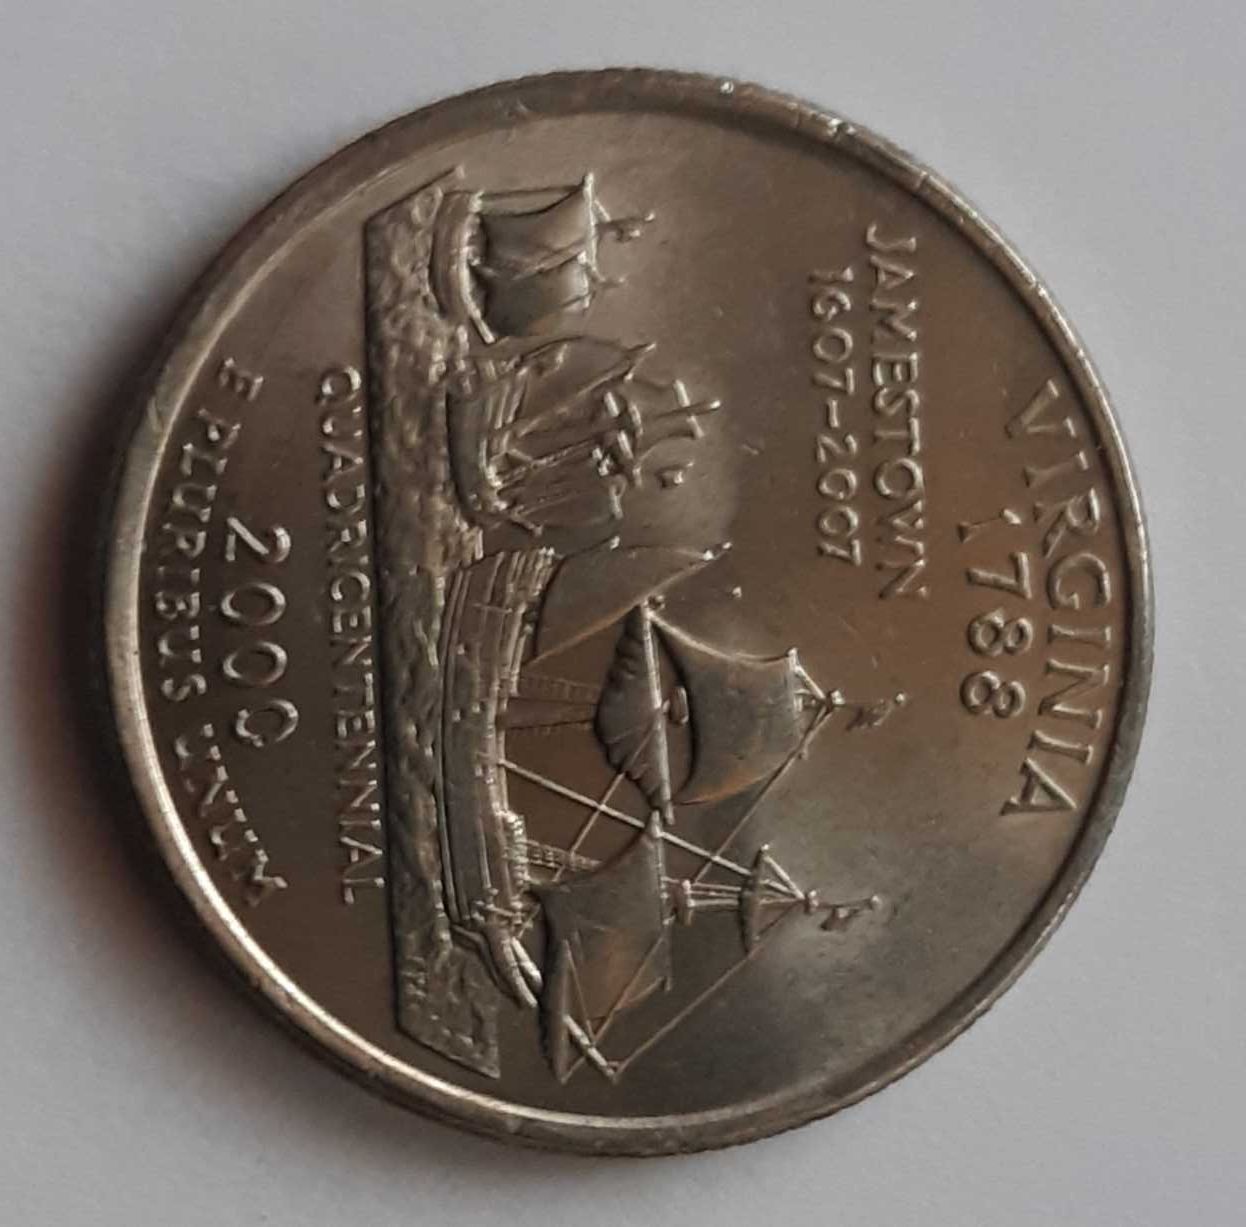 Moneta USA QUARTER DOLLAR 2000 P - STAN VIRGINIA - 25 centów - Piękna!